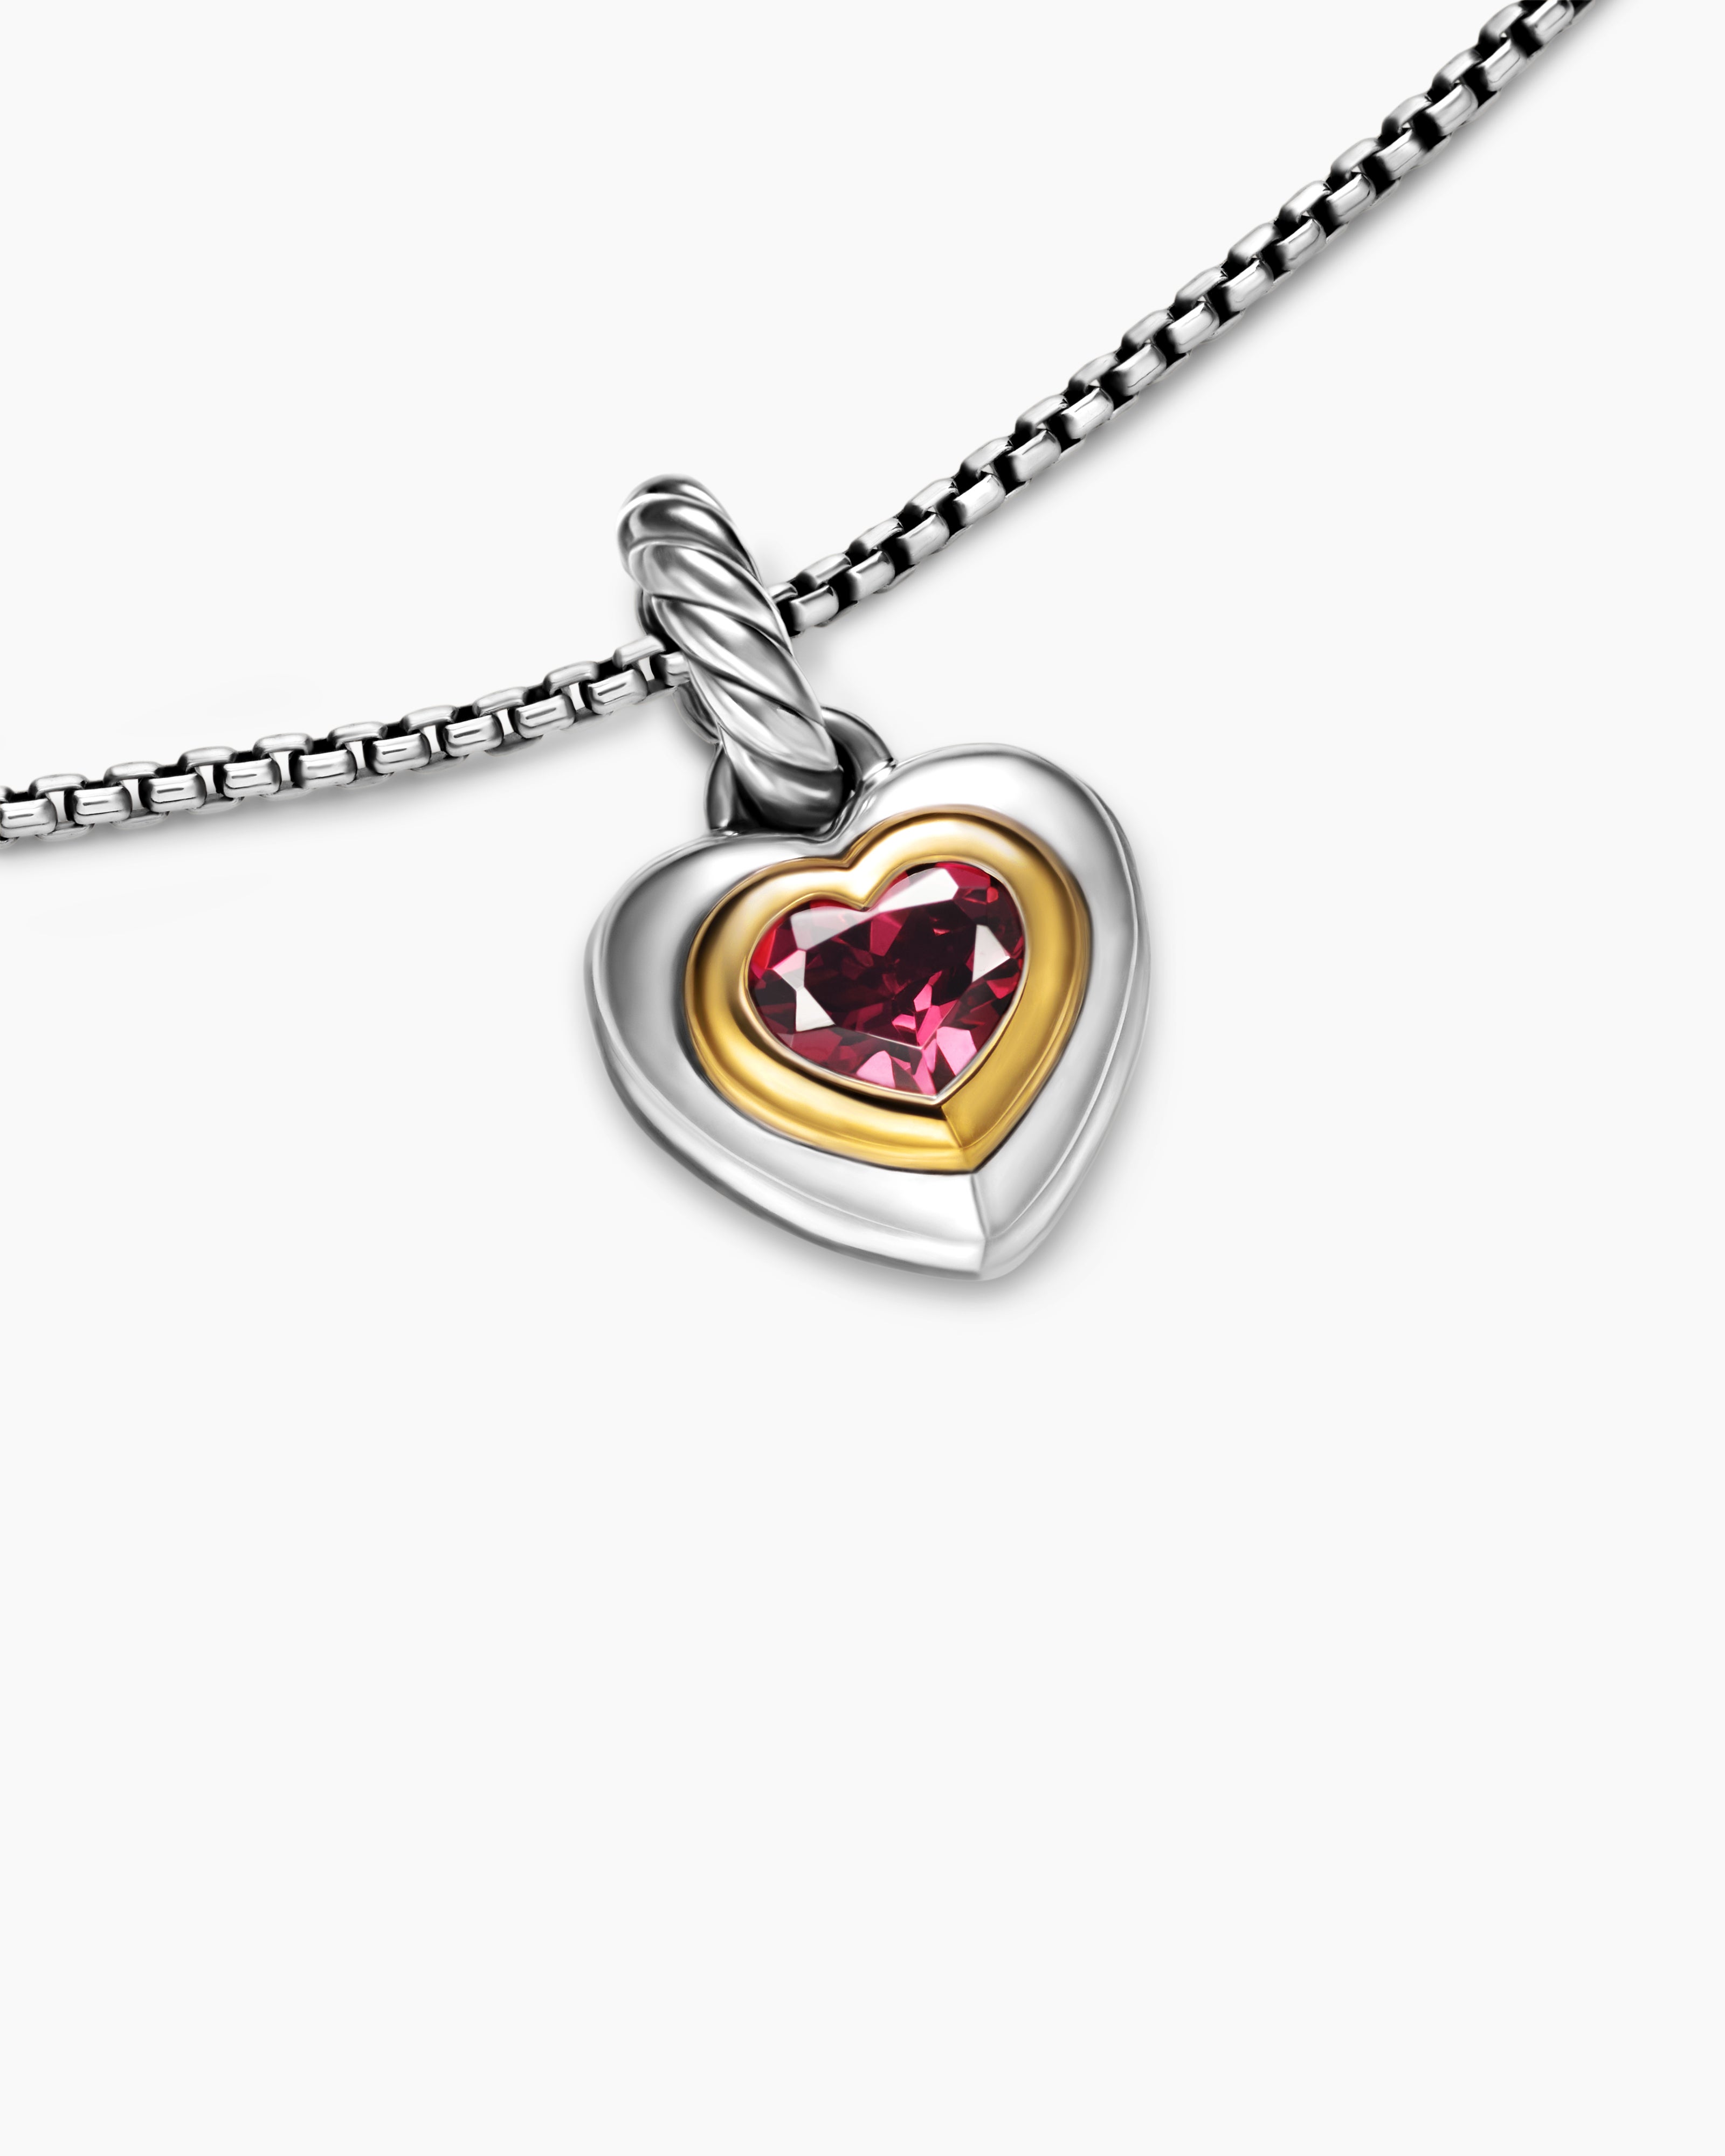 Amazon.com: Brighton Heart Necklace